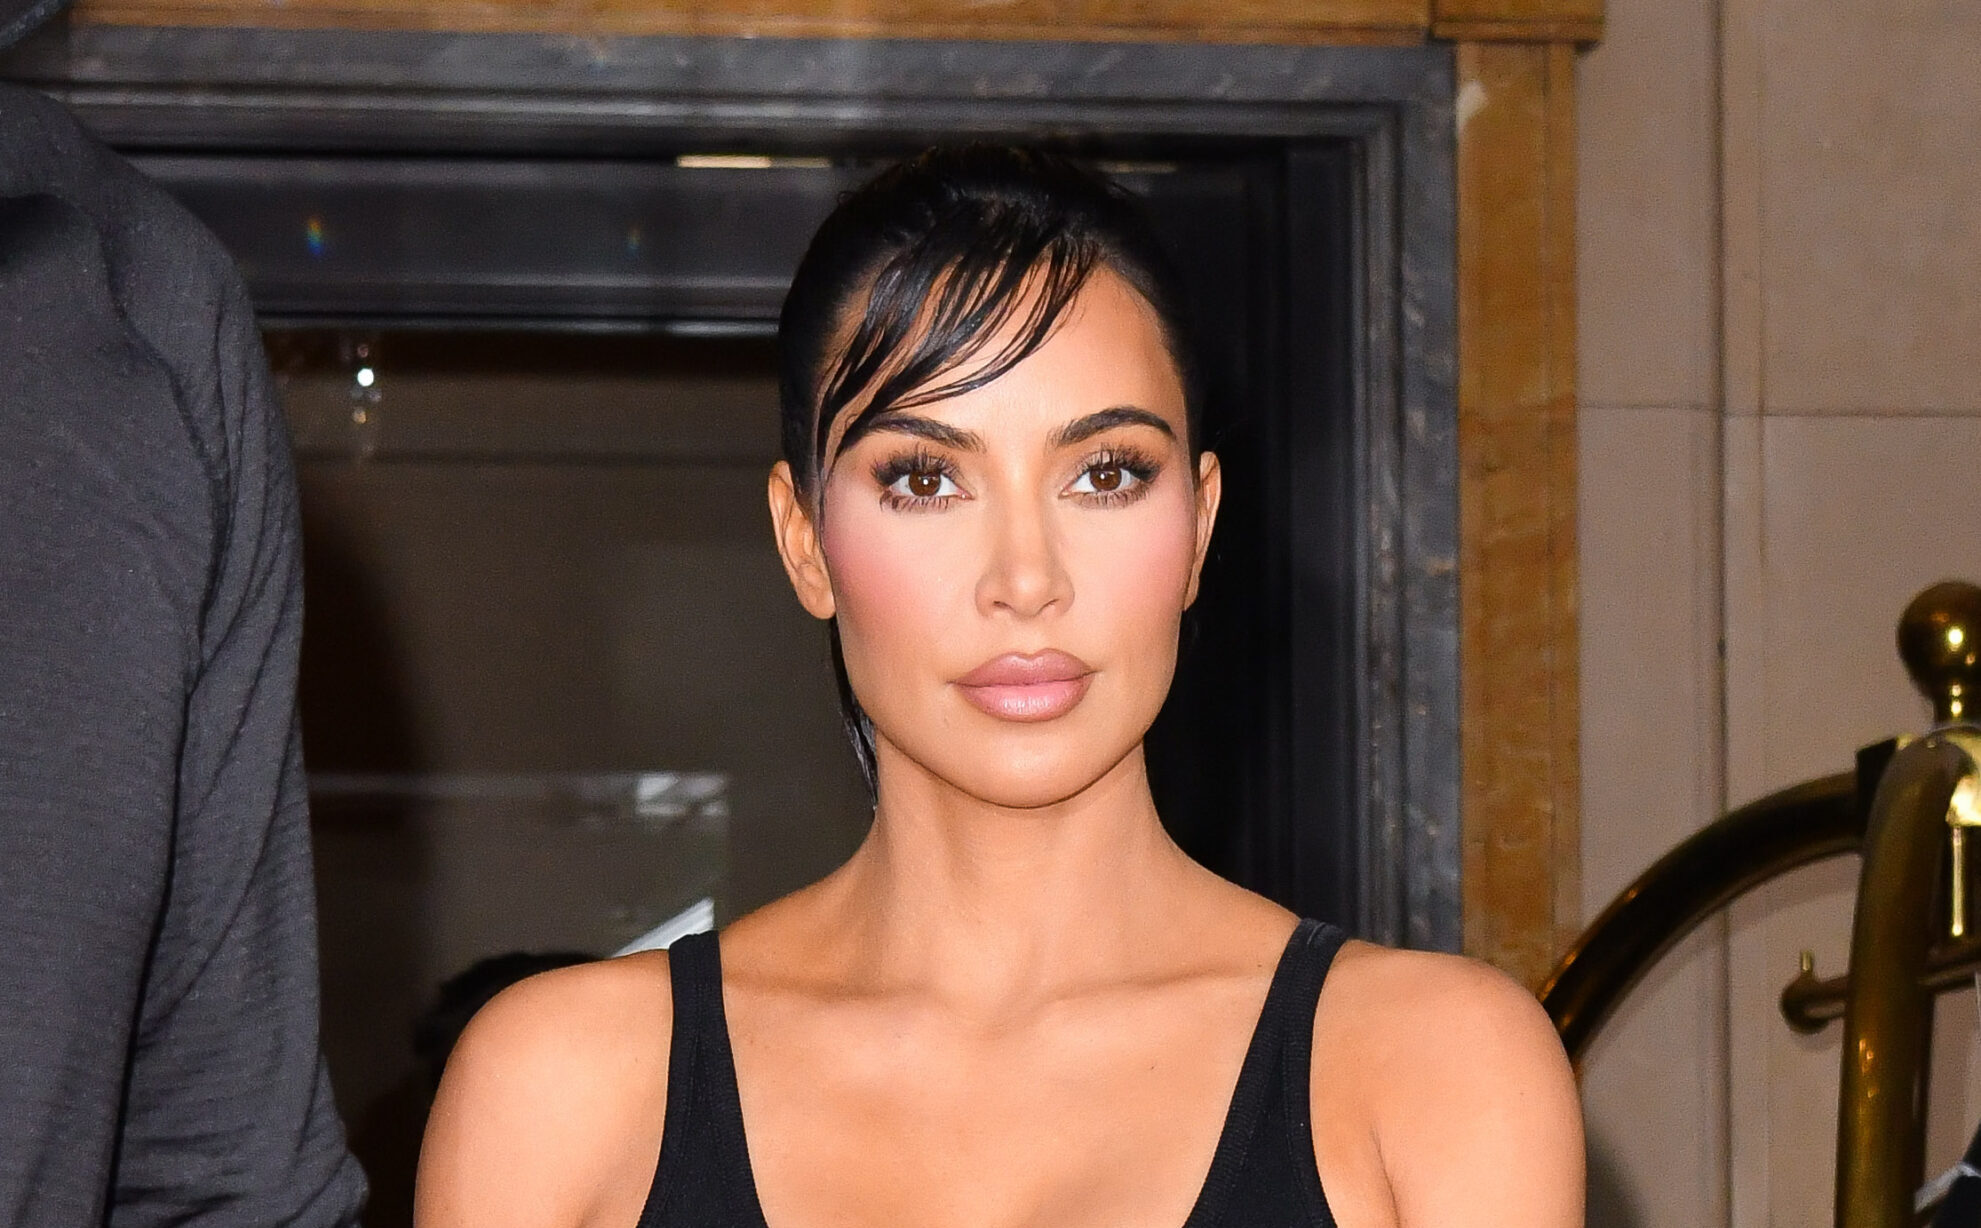 Kim Kardashian Is Impressing Her “American Horror Story” Co-Stars